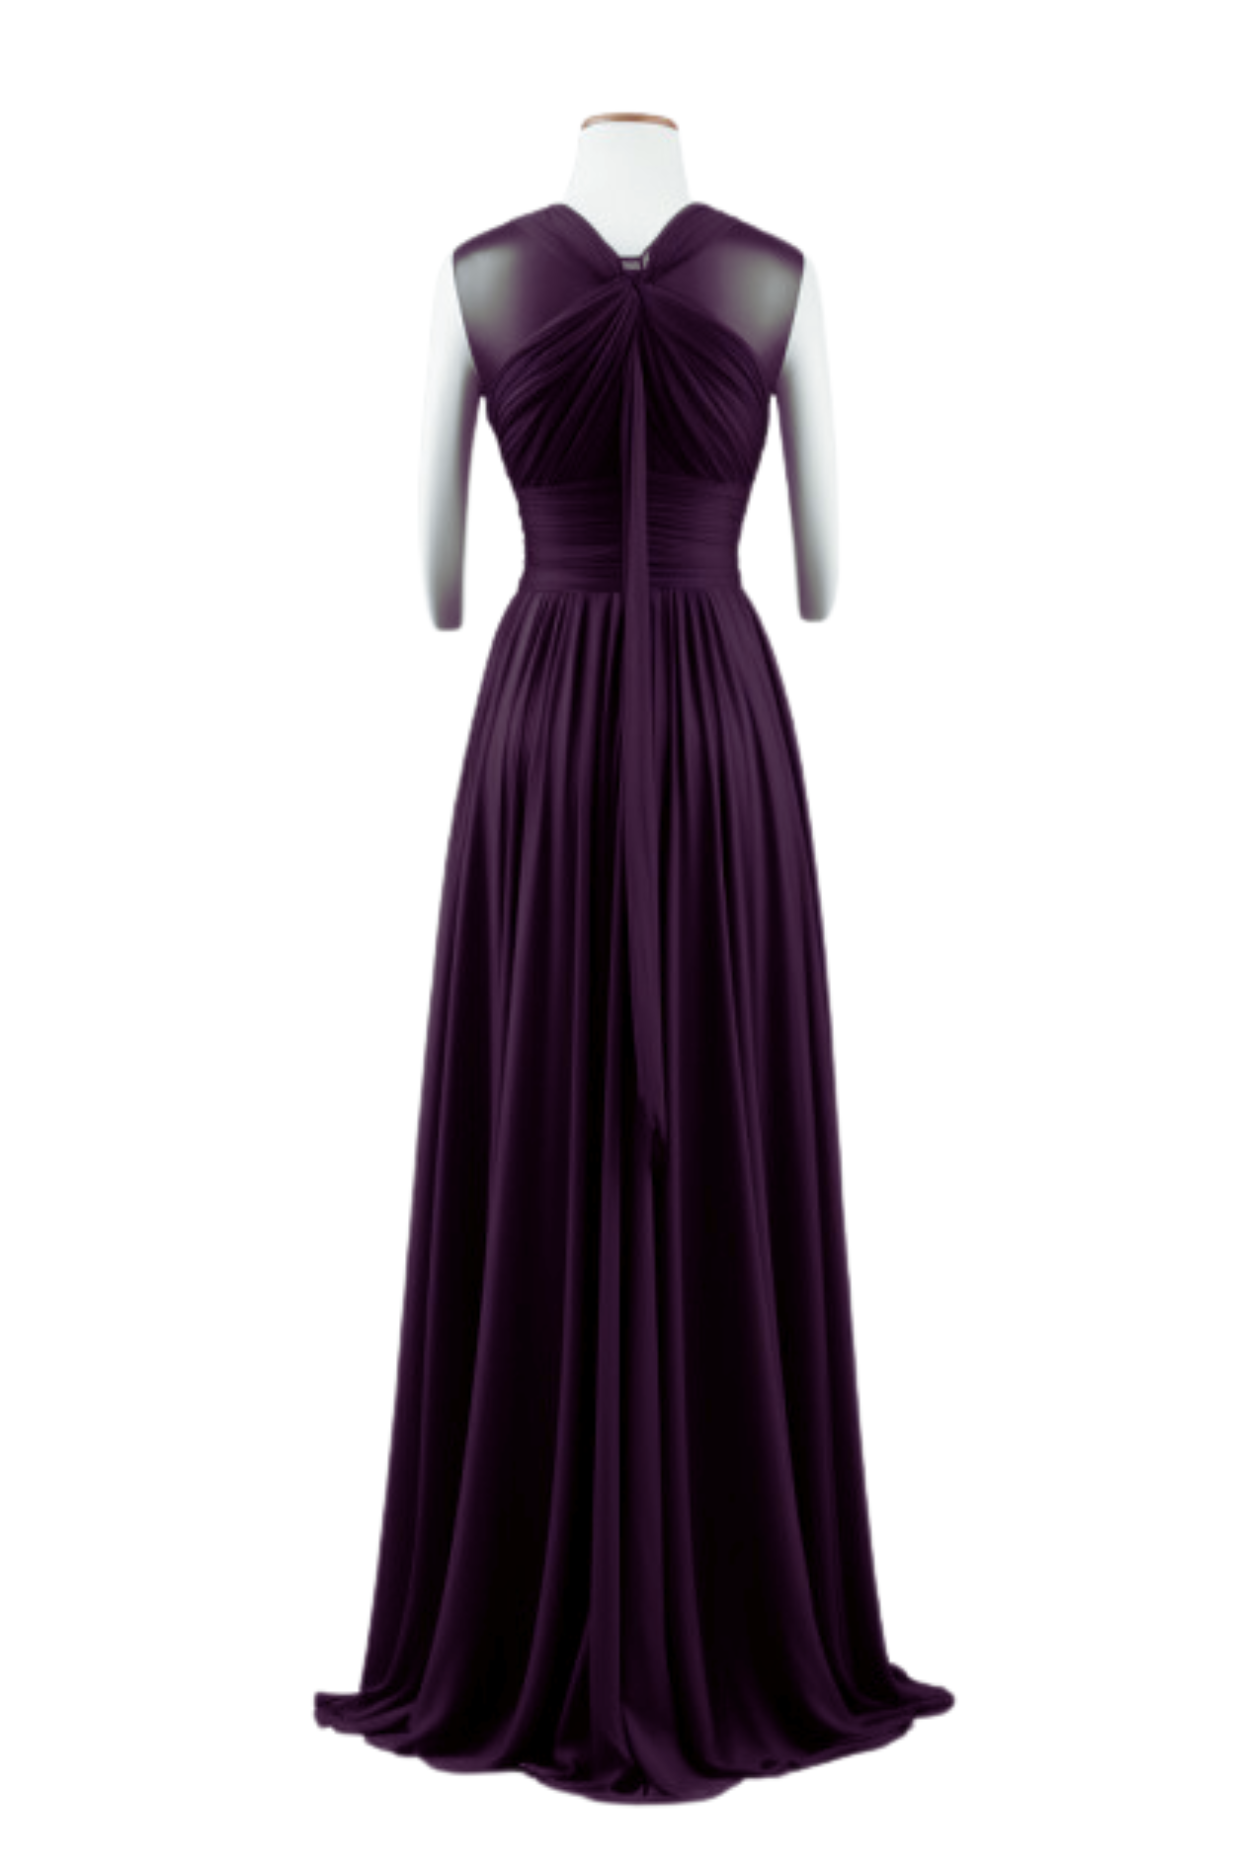 ZIJ005 Dark Violet Sleeveless Draped Gown